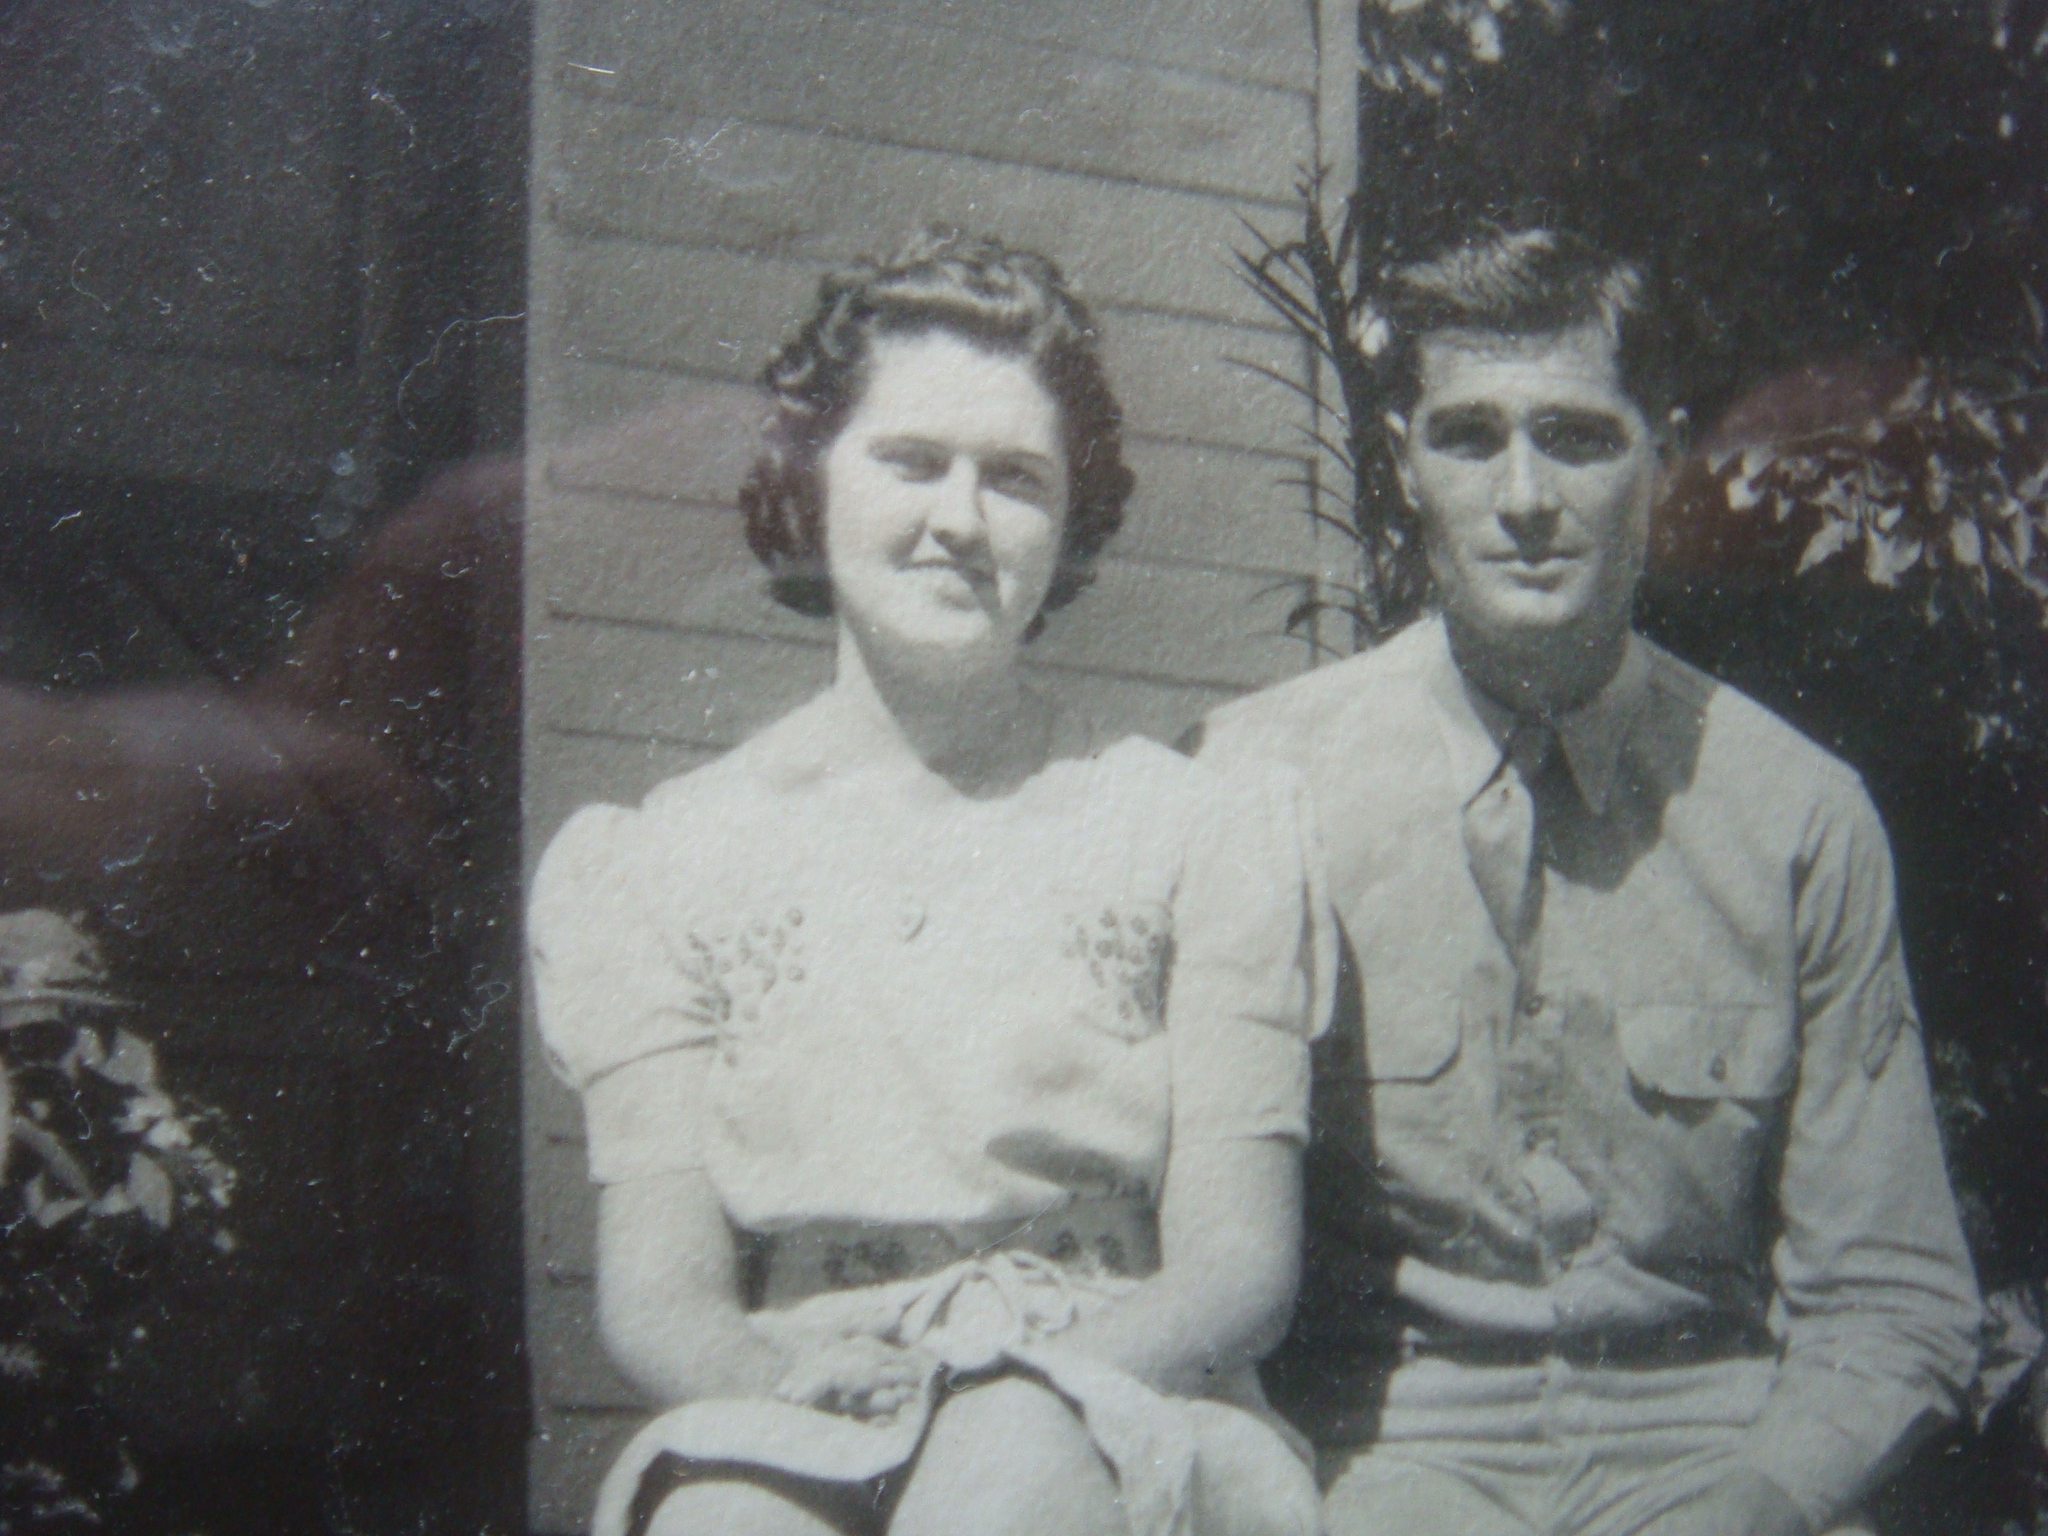 Valera Williams & Glenn Heath, KY 1942